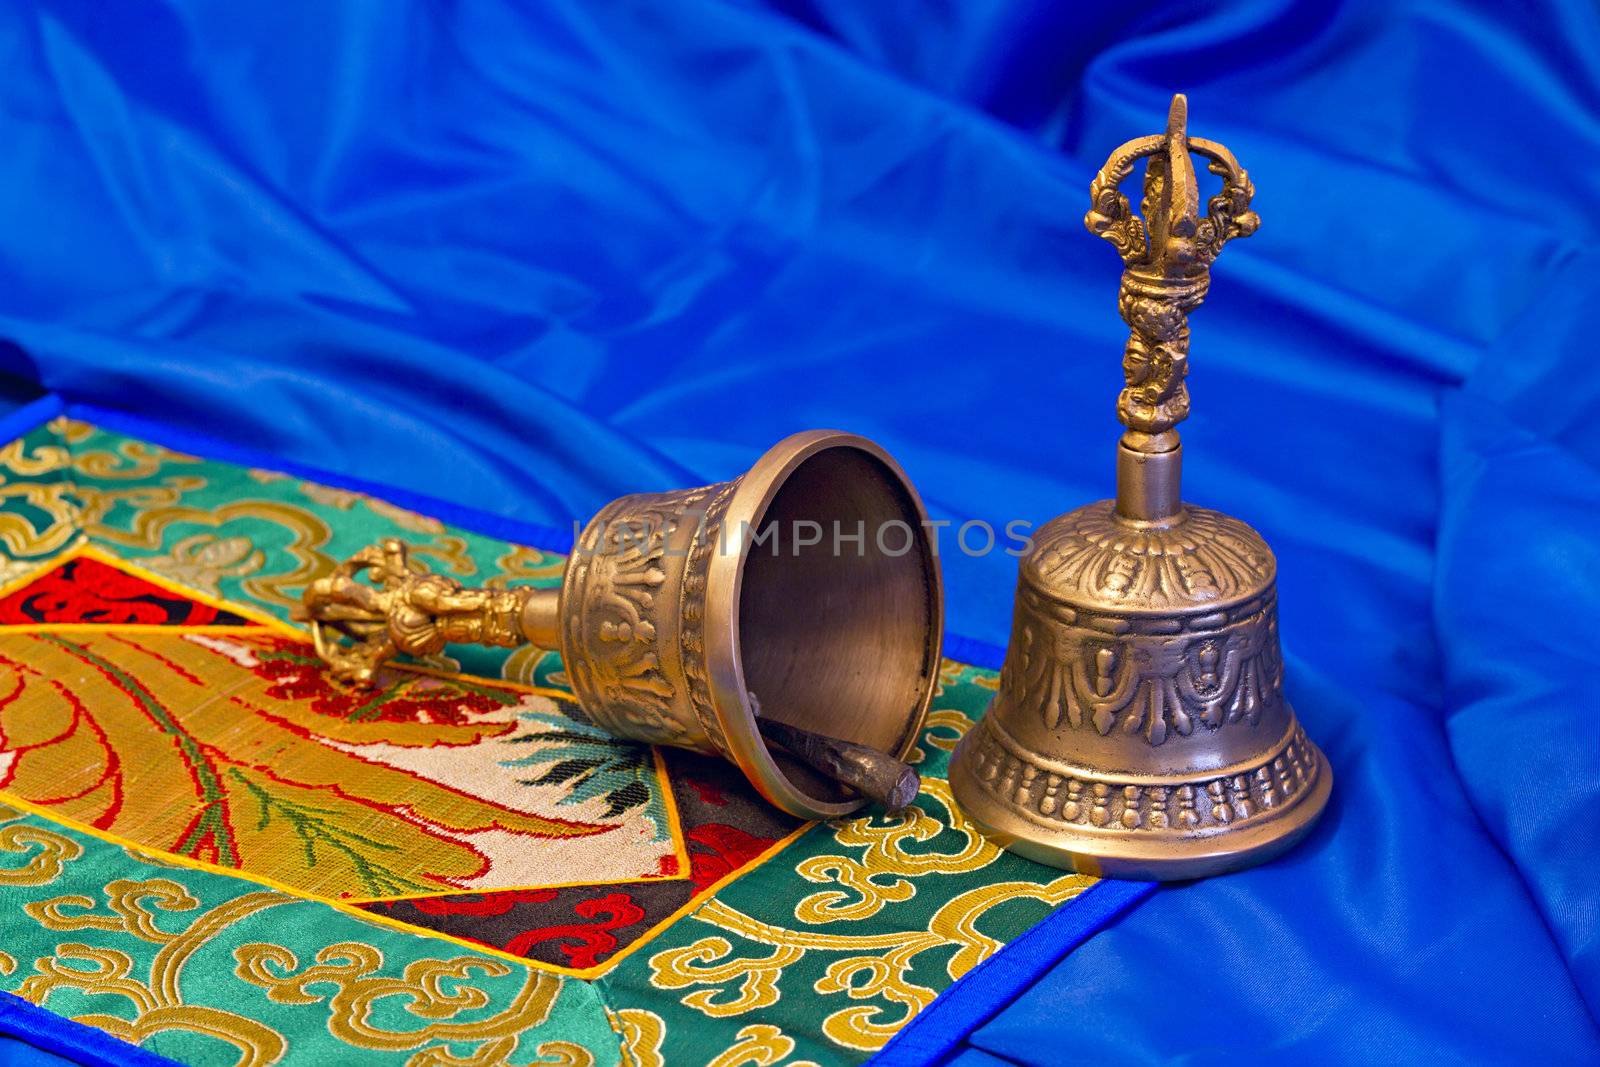 two Tibetan ritual bells on a blue background